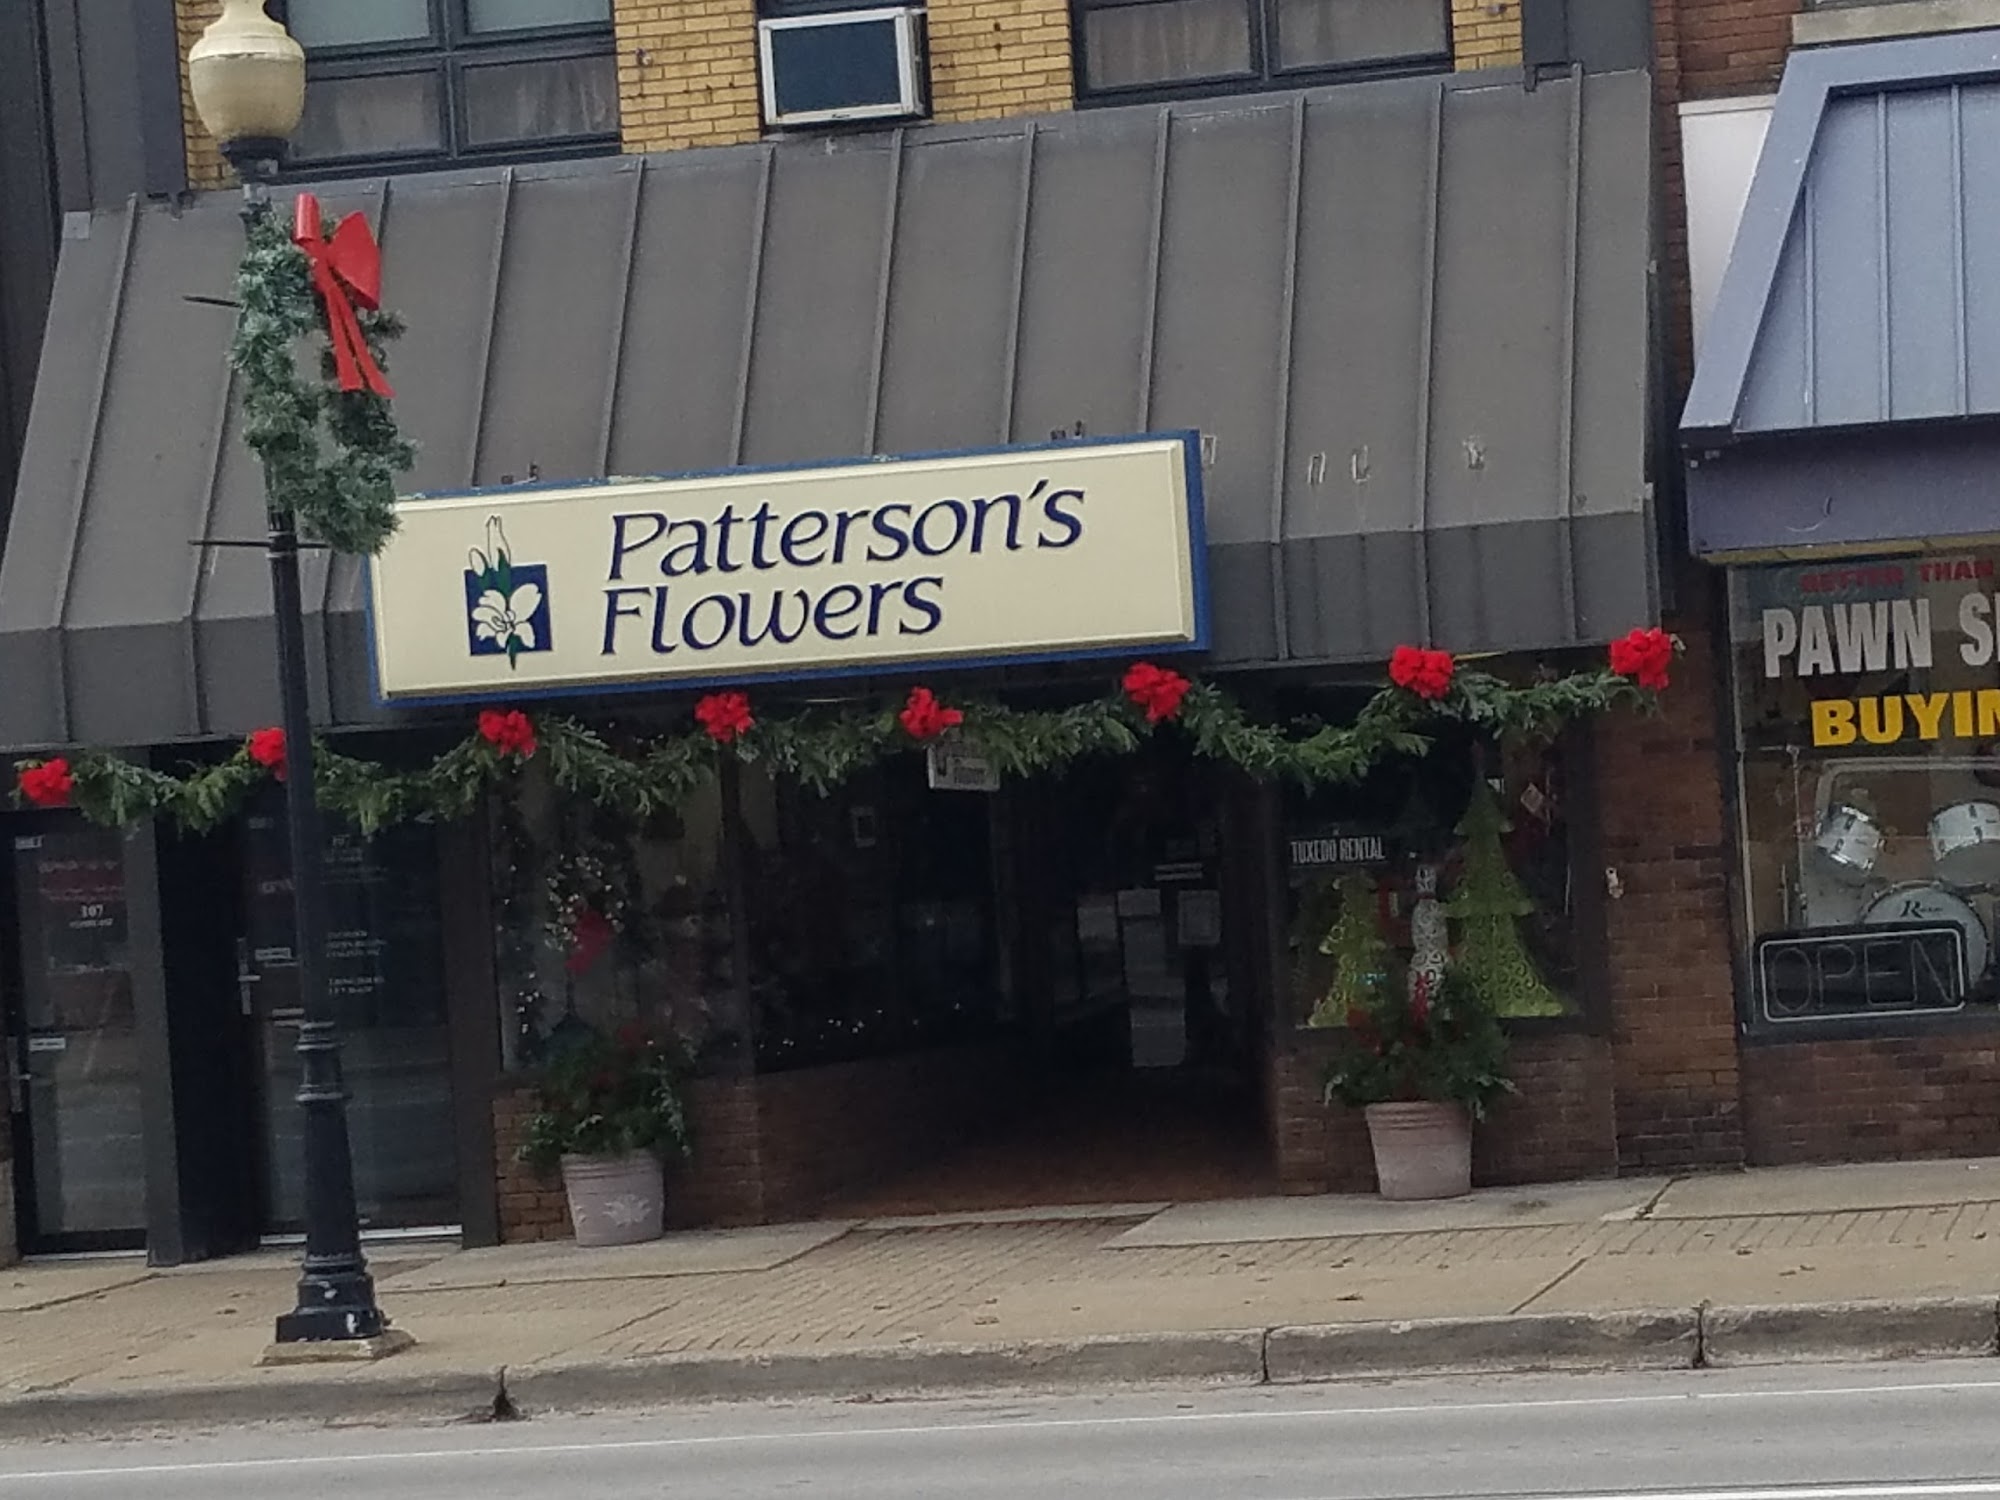 Patterson's Flowers